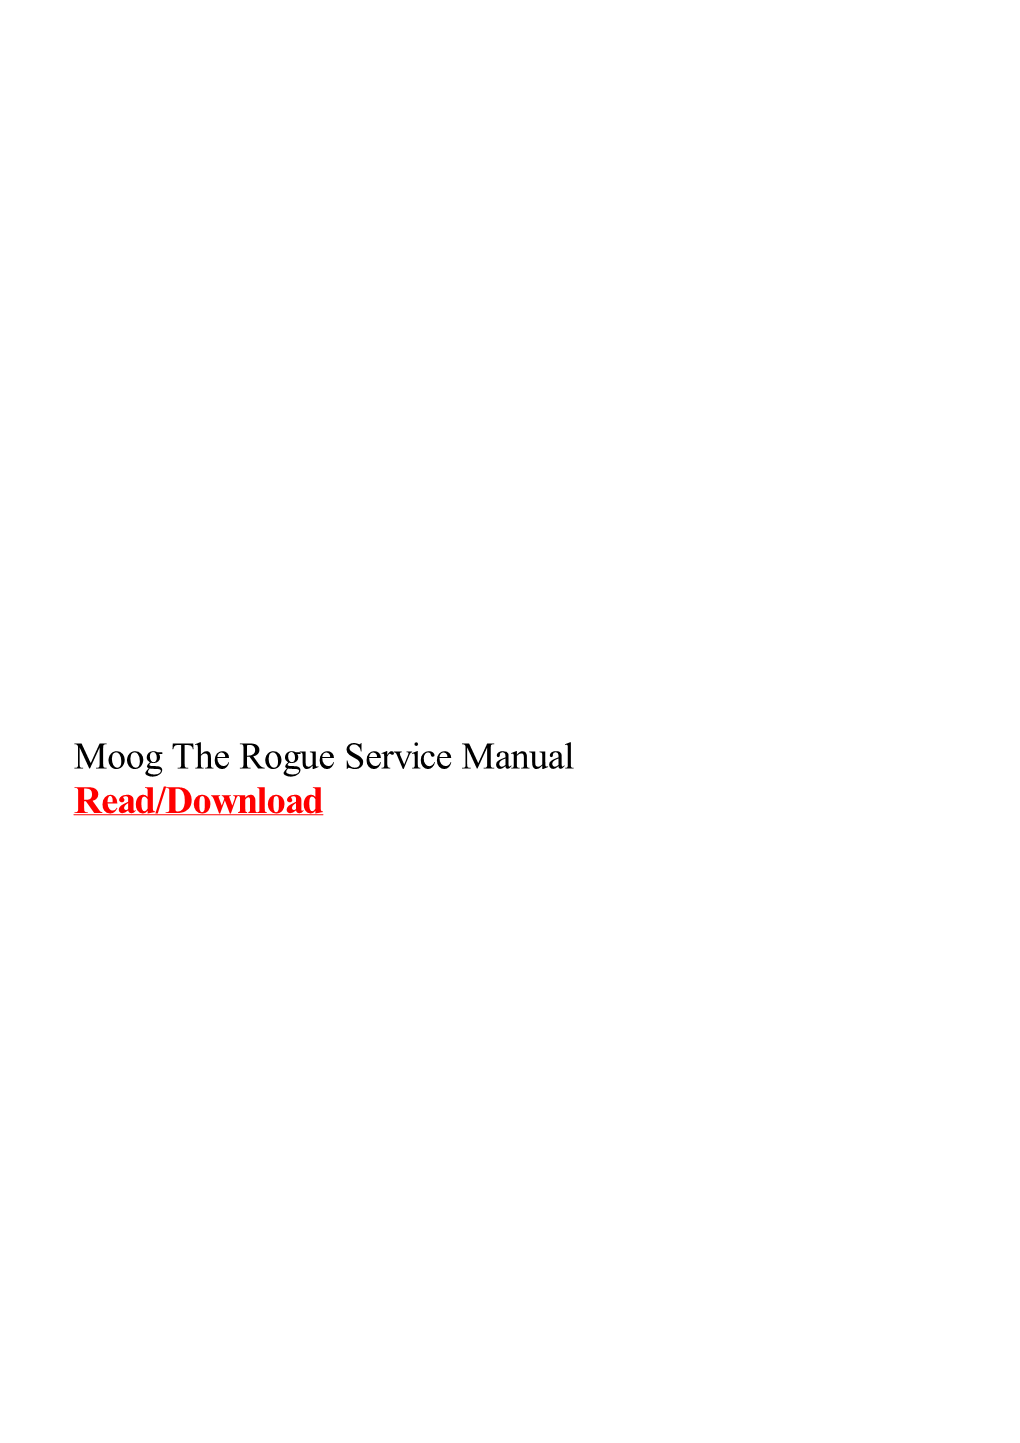 Moog the Rogue Service Manual